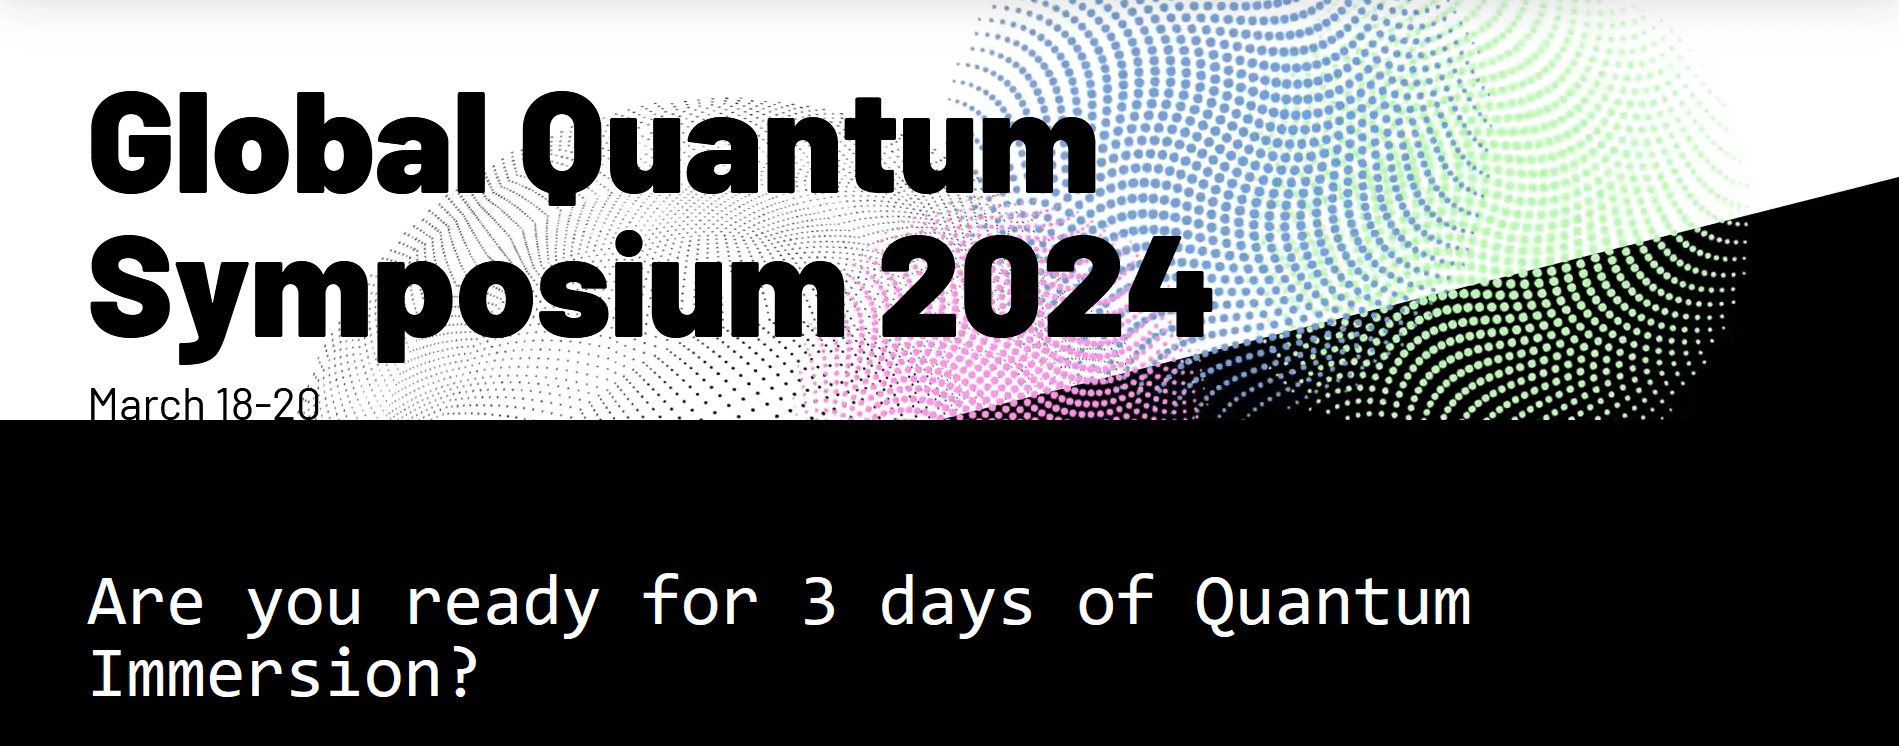 Global Quantum Symposium 2024 Basel Area Business & Innovation